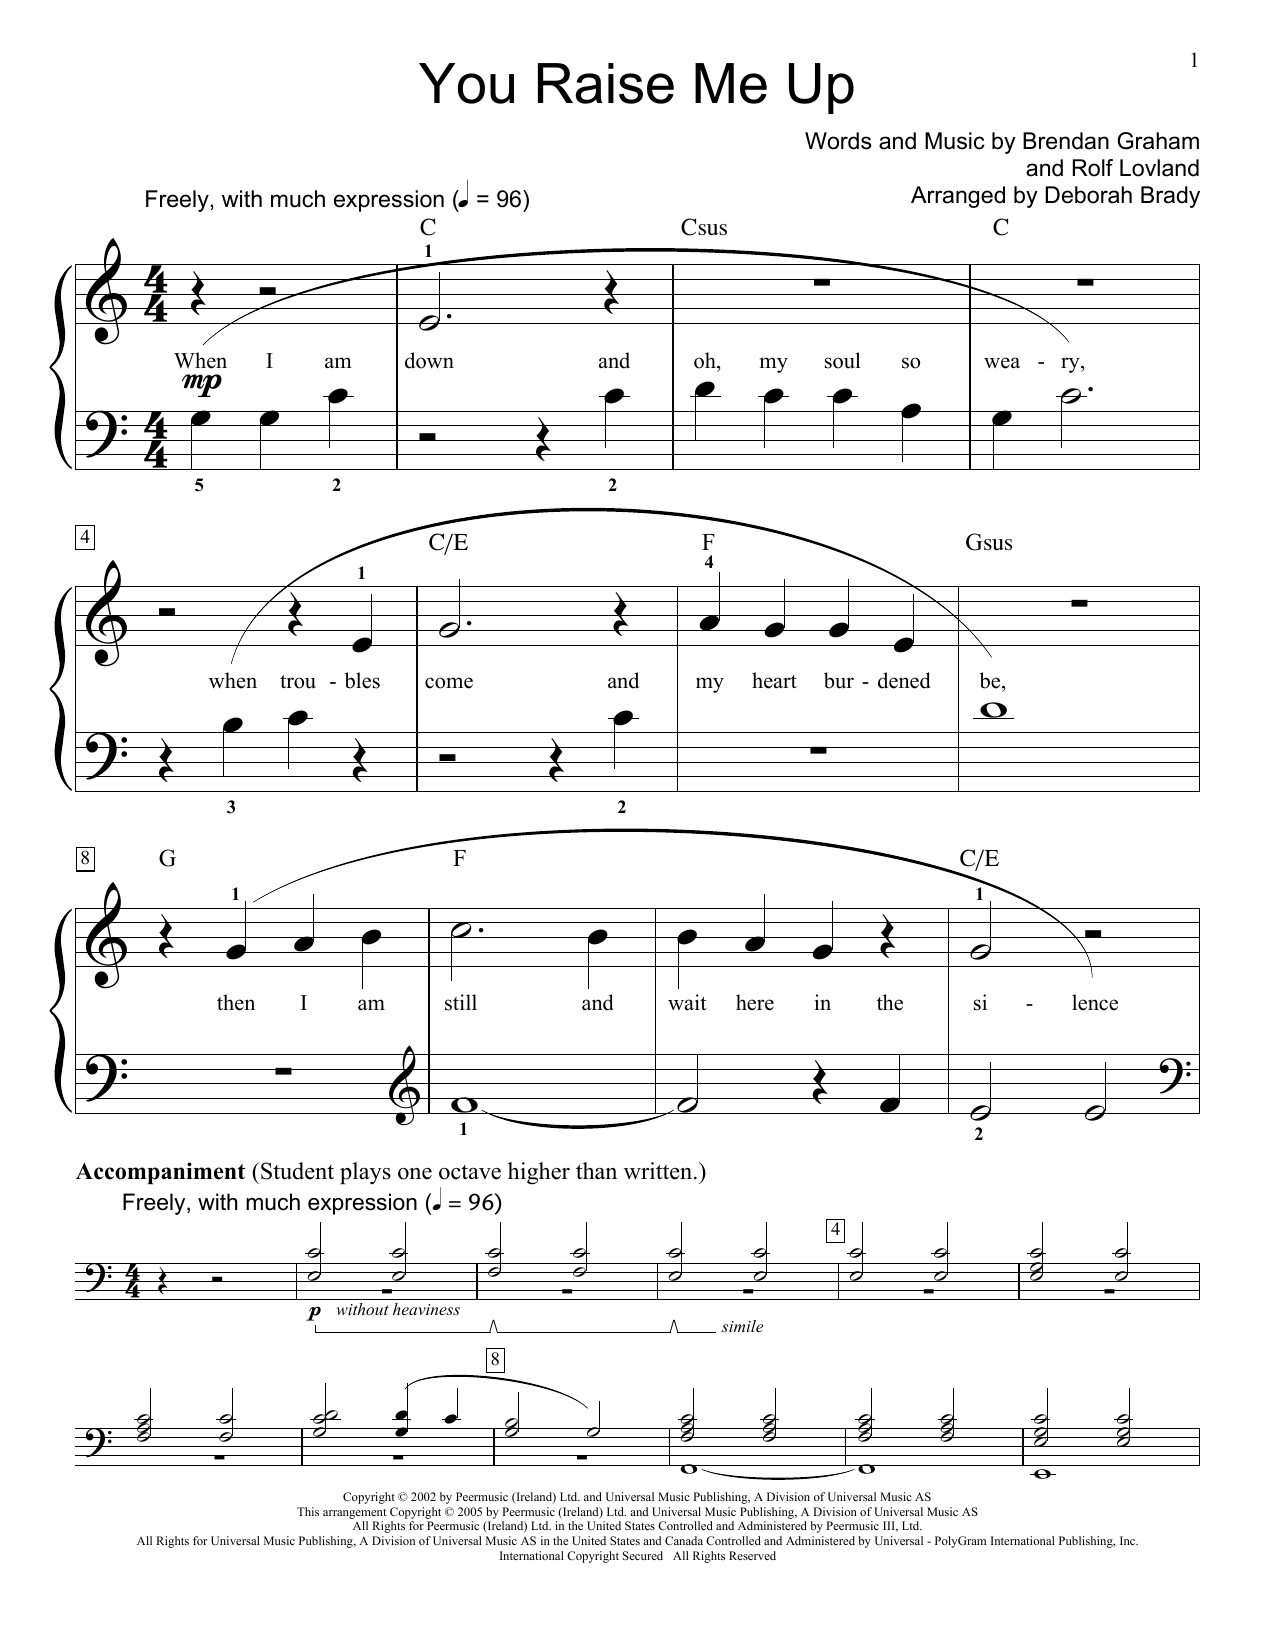 Josh Groban You Raise Me Up (arr. Deborah Brady) Sheet Music Notes & Chords for Educational Piano - Download or Print PDF